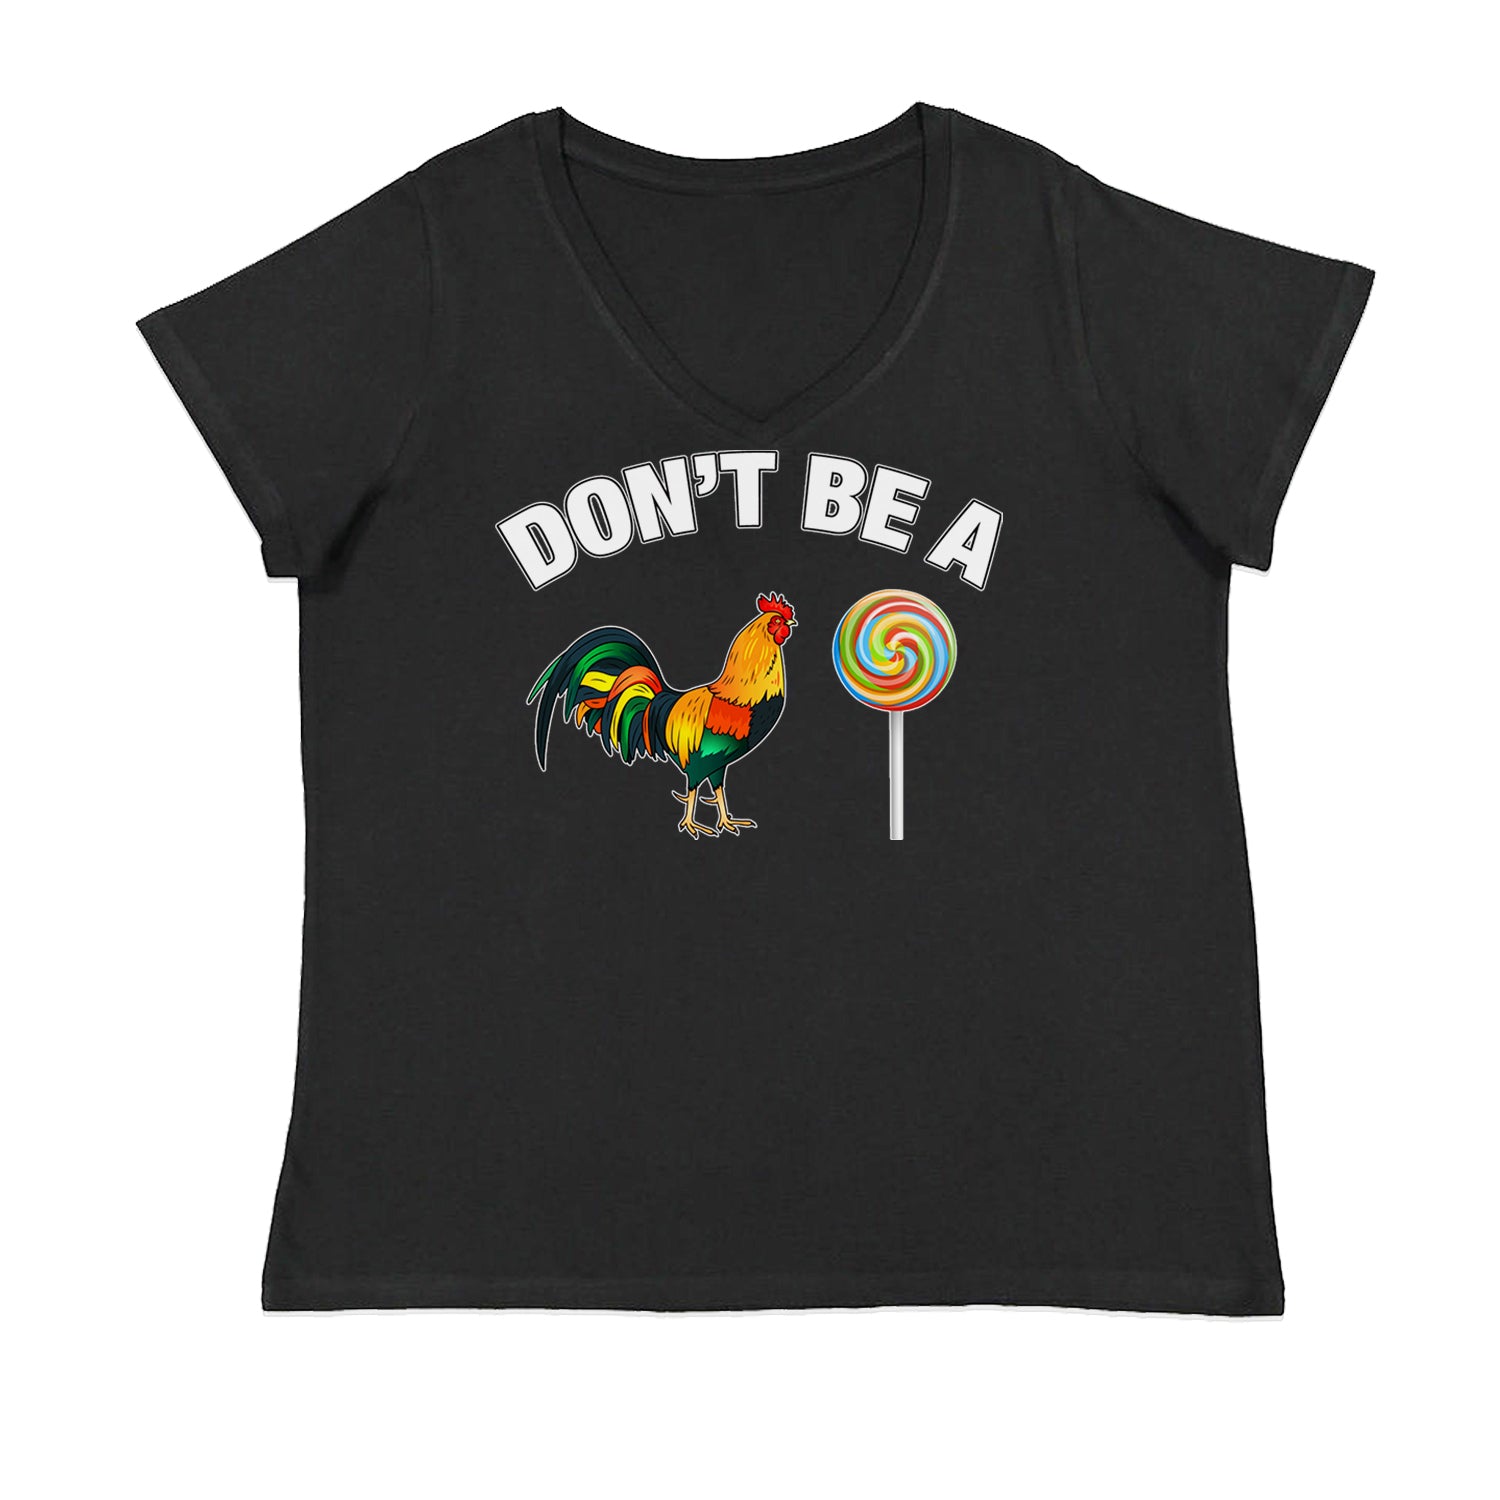 Don't Be A C-ck Sucker Funny Sarcastic Womens Plus Size V-Neck T-shirt